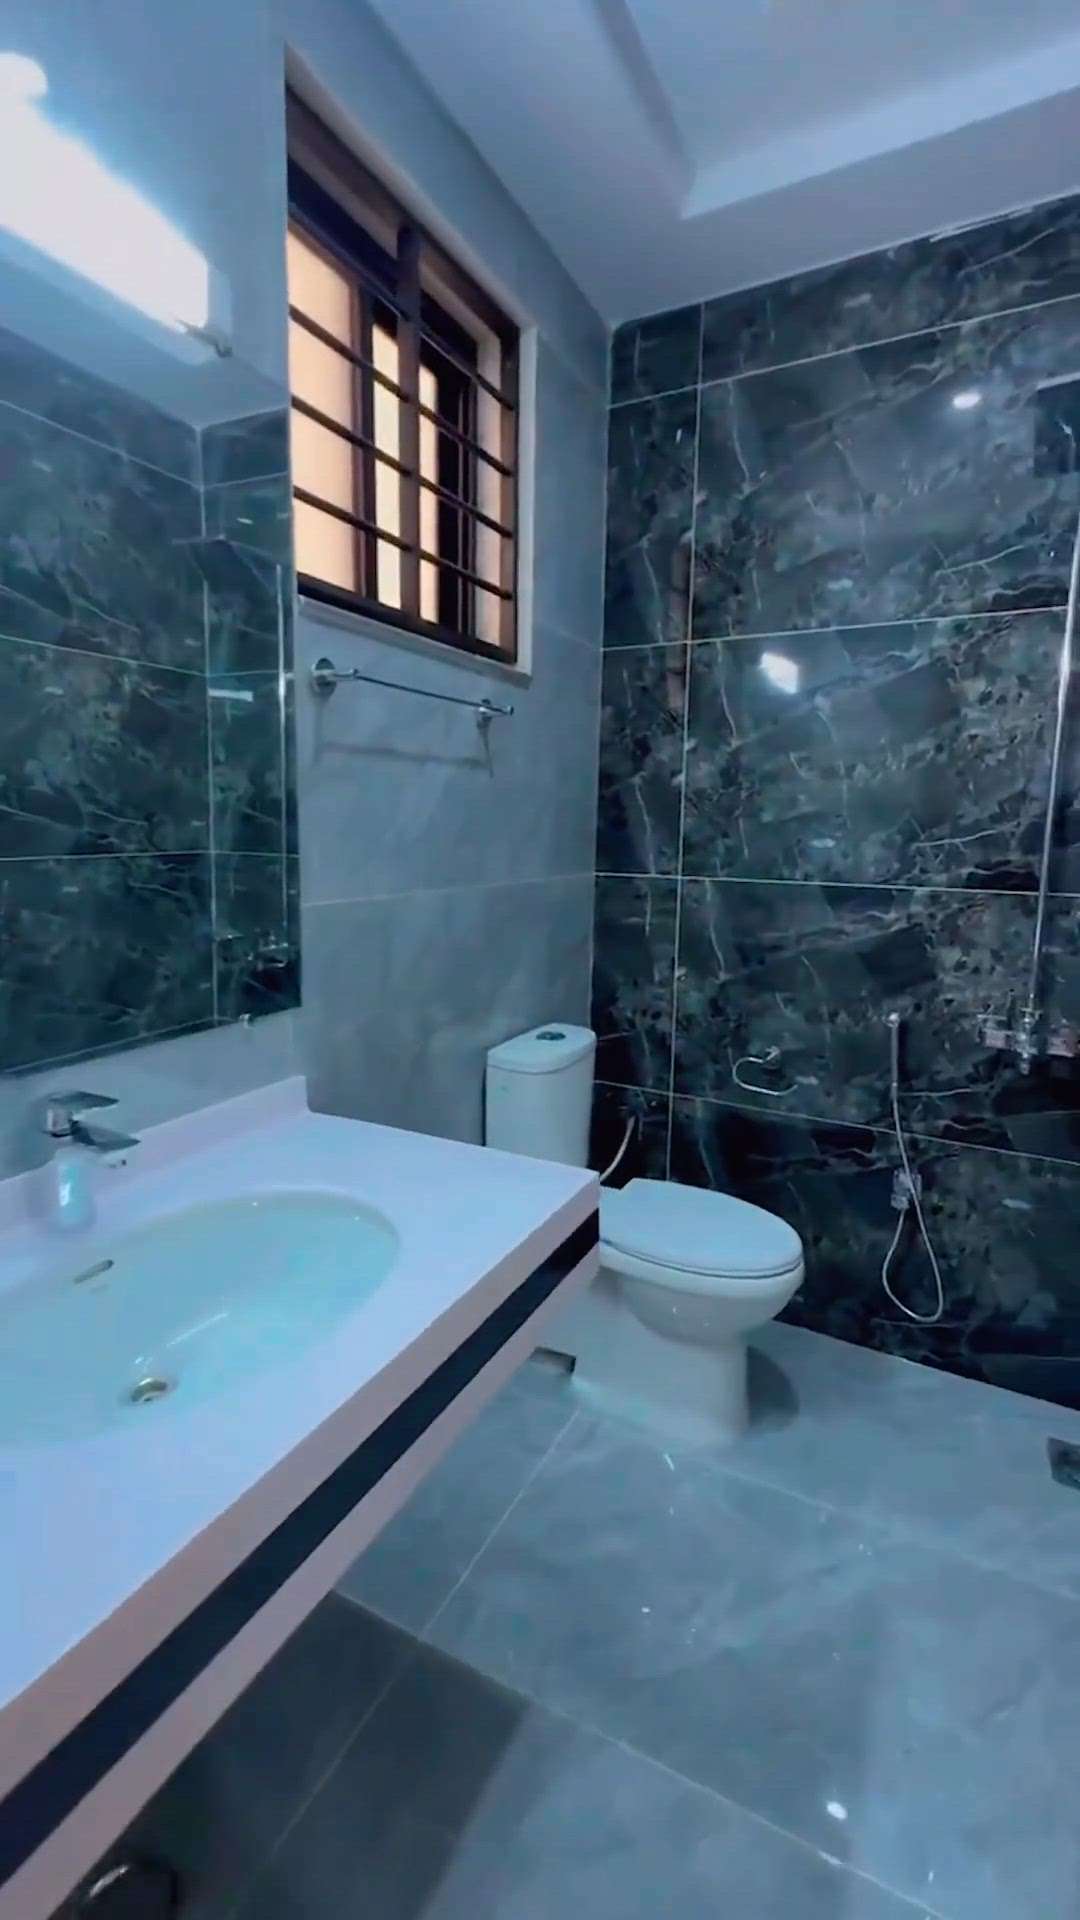 #Bathroom  #FlooringTiles  #GraniteFloors  #BathroomTIles  #tiles  #KitchenTiles  #marble  #50LakhHouse  #jaipurdiaries  #jaipur  #jaipurblog  #jaipurcity  #jaipurjewellery  #jothwara  #veshali  #vidhyadharnagar  #murlipura  #durgapuja  #malviyanagarjaipur  #Italian  #choudhay_villa  #jpdesignersandbuildres  #kalwarroad  #hatho_ke_jadugar 
choudhary Ji contractor 
8003429349